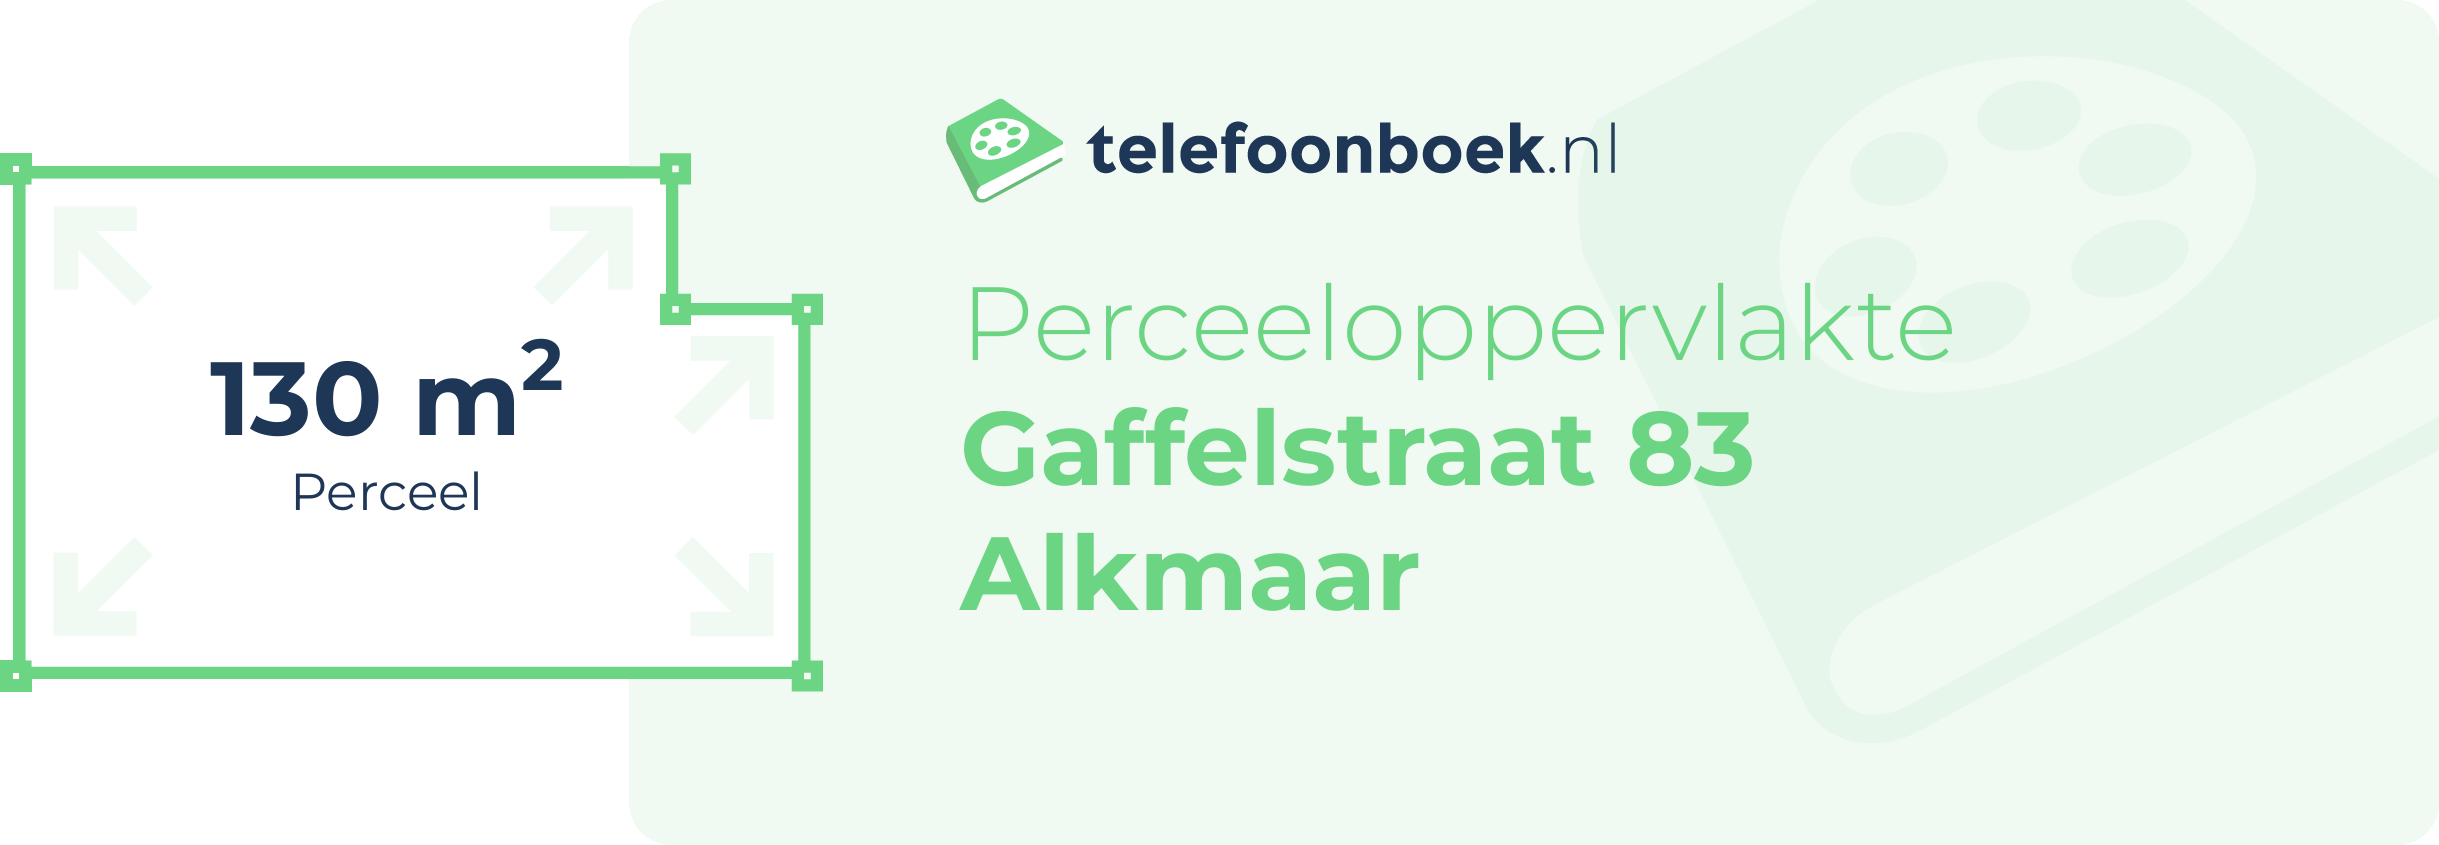 Perceeloppervlakte Gaffelstraat 83 Alkmaar